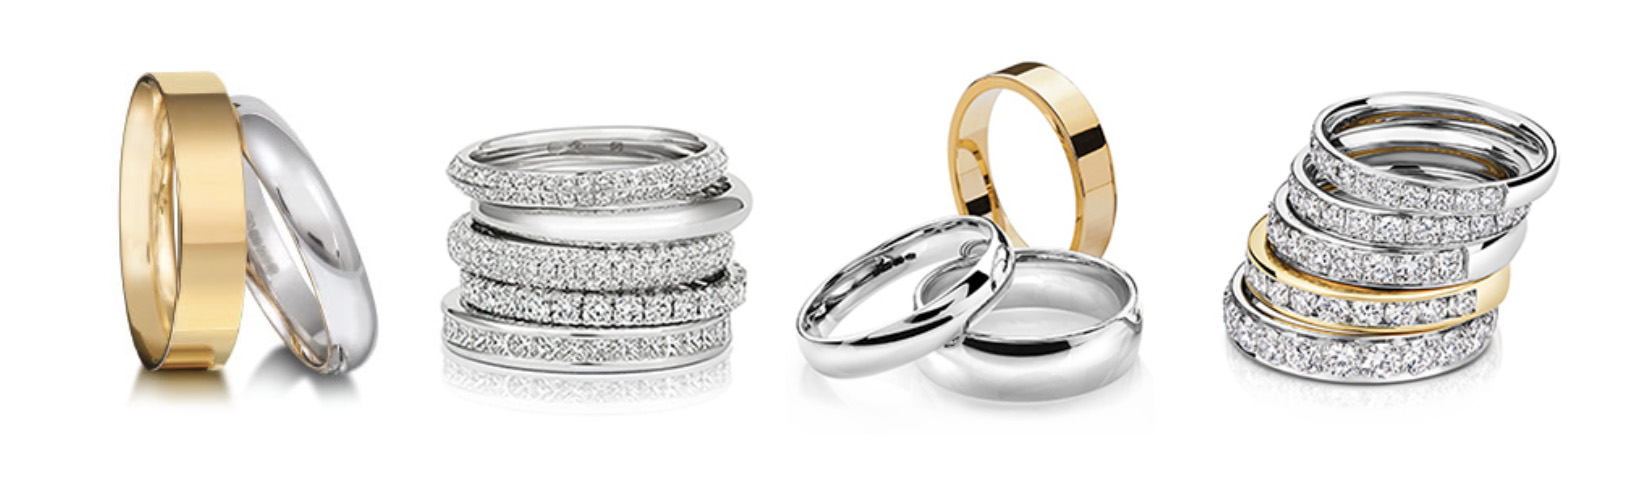 Choosing the Perfect Wedding Ring: Classic Plain Bands or Dazzling Diamond Set?